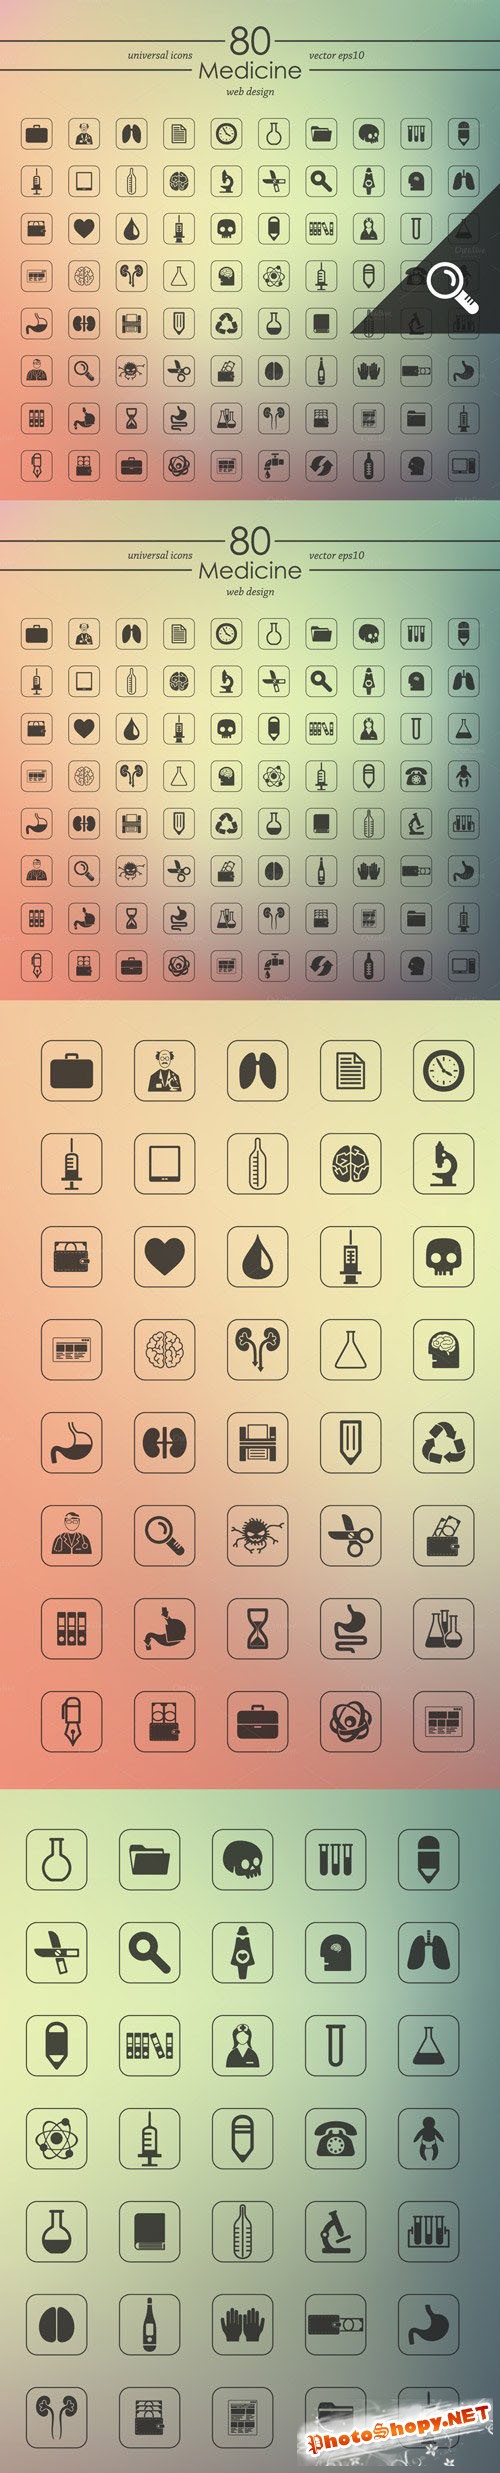 80 MEDICINE Icons - CM 201401